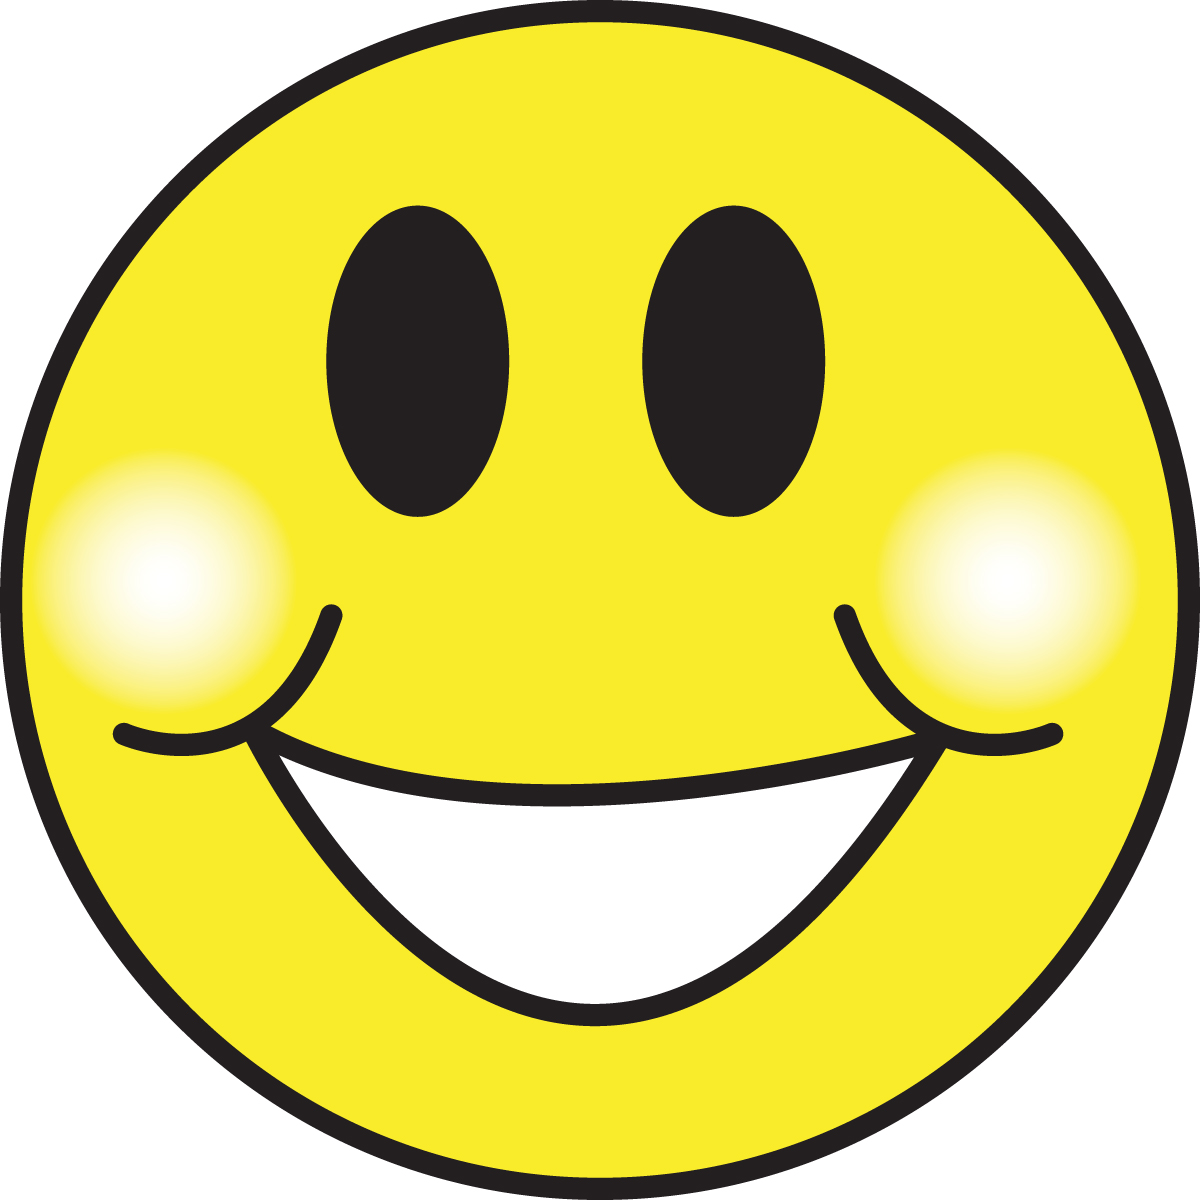 Smiley face happy smiling face clip art at vector clip art 2 ...